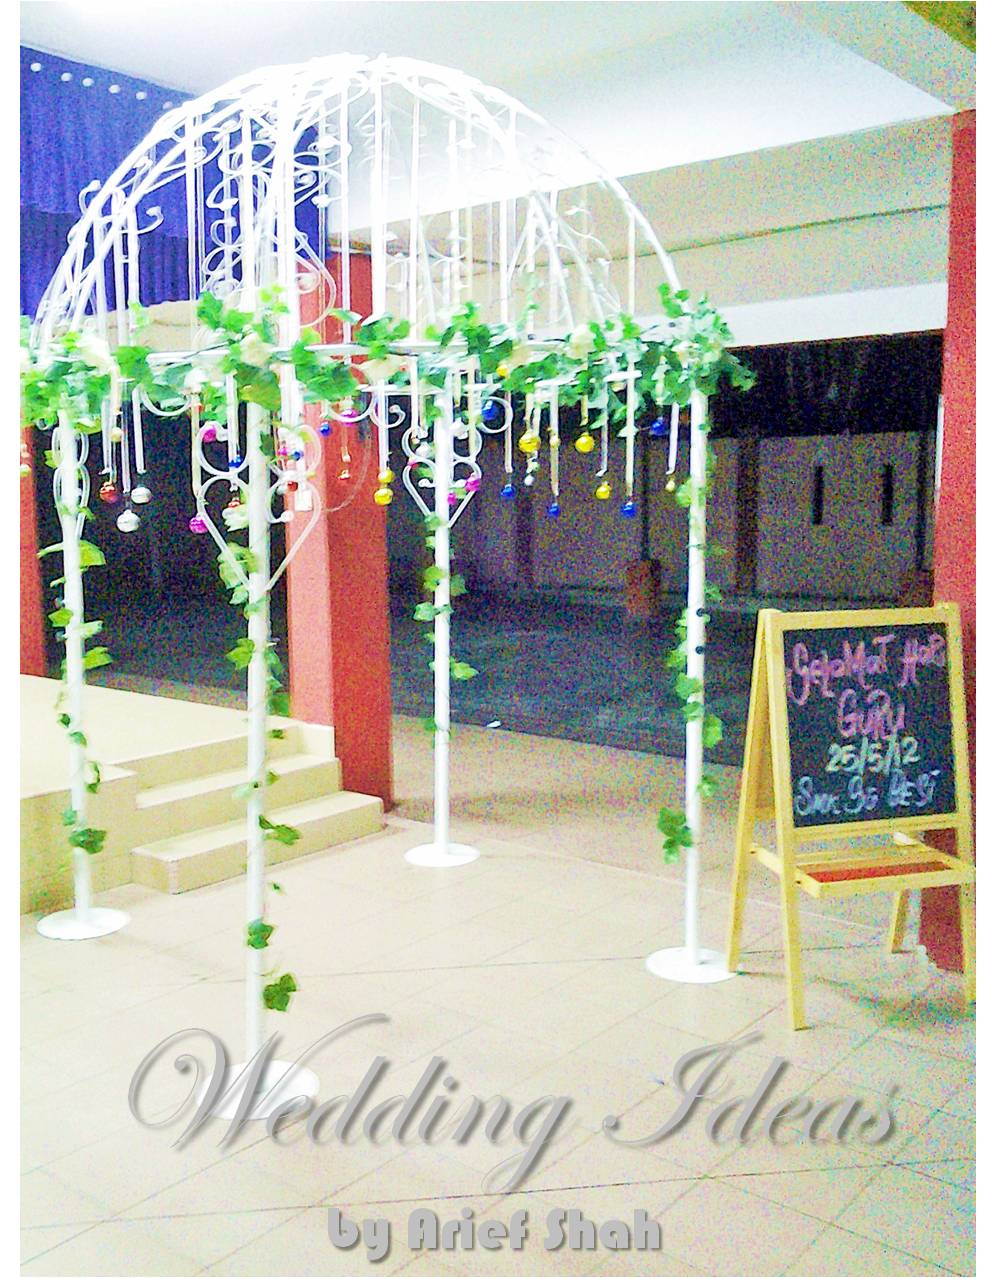 Wedding Ideas Teacher s  Day  Decoration  by Wedding Ideas